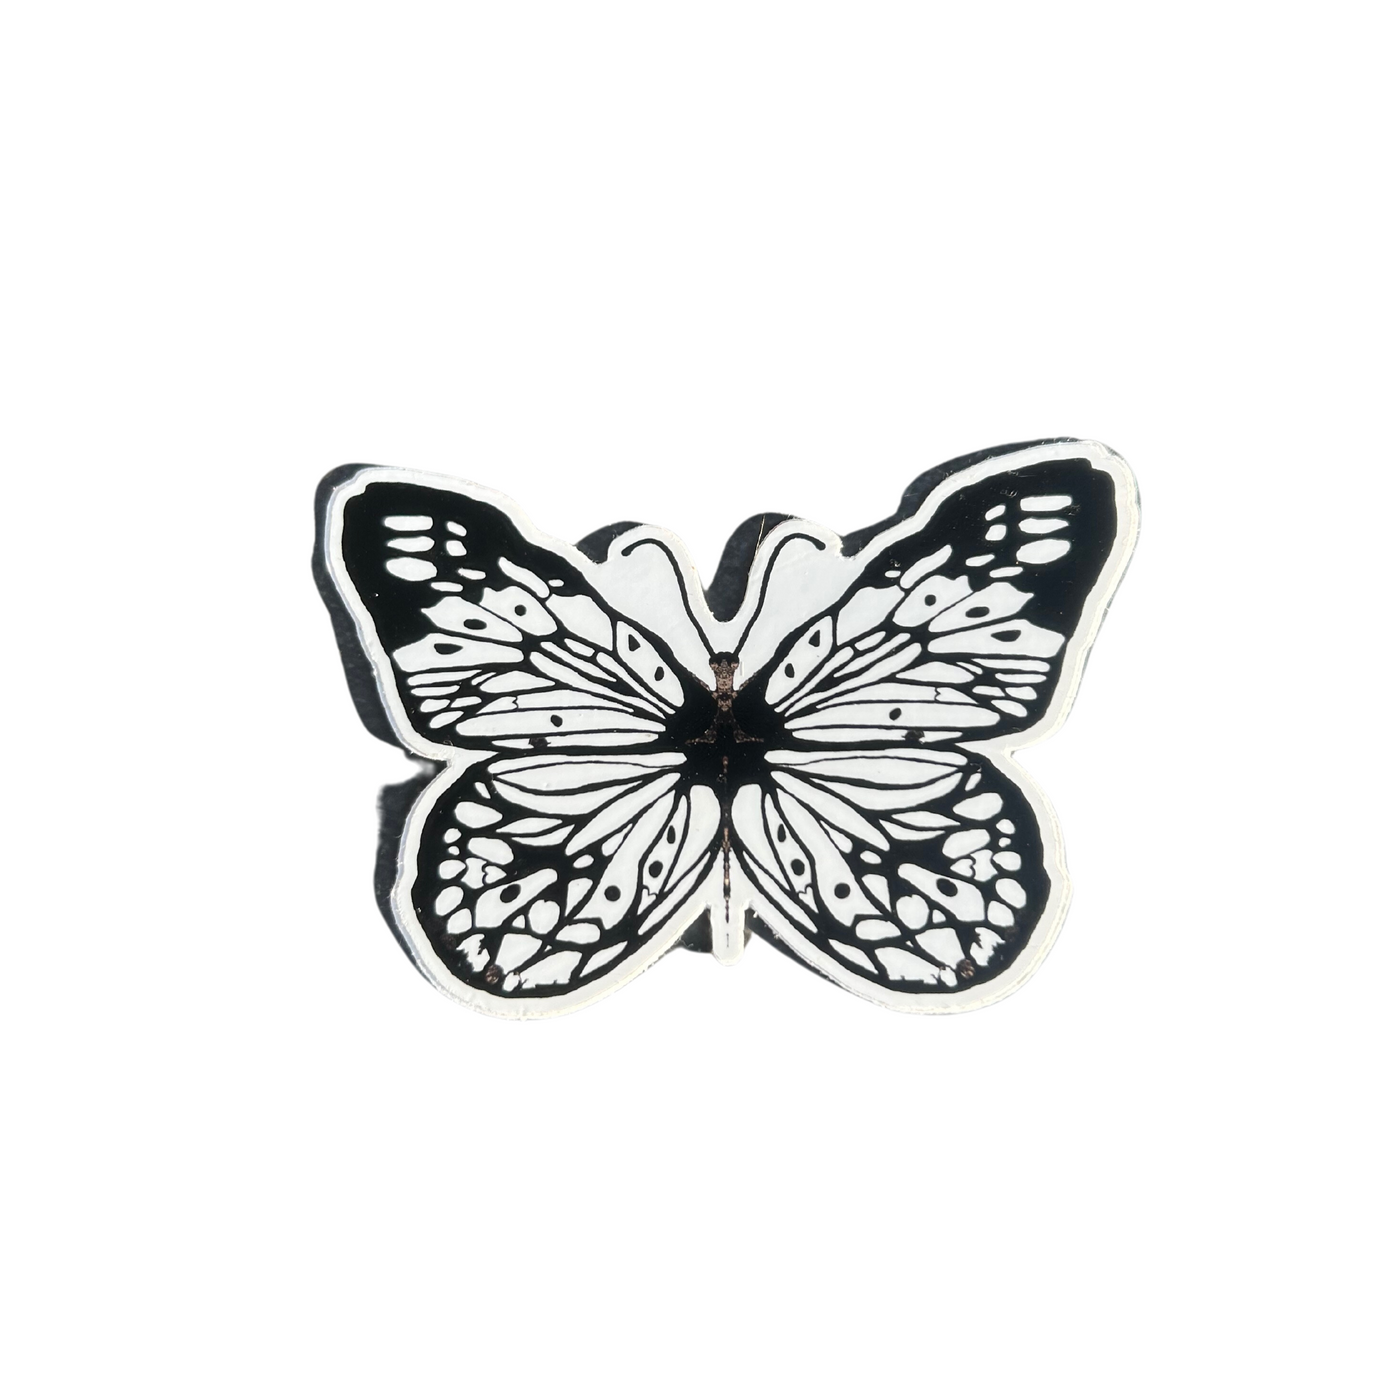 "Black & White Butterfly" Sticker